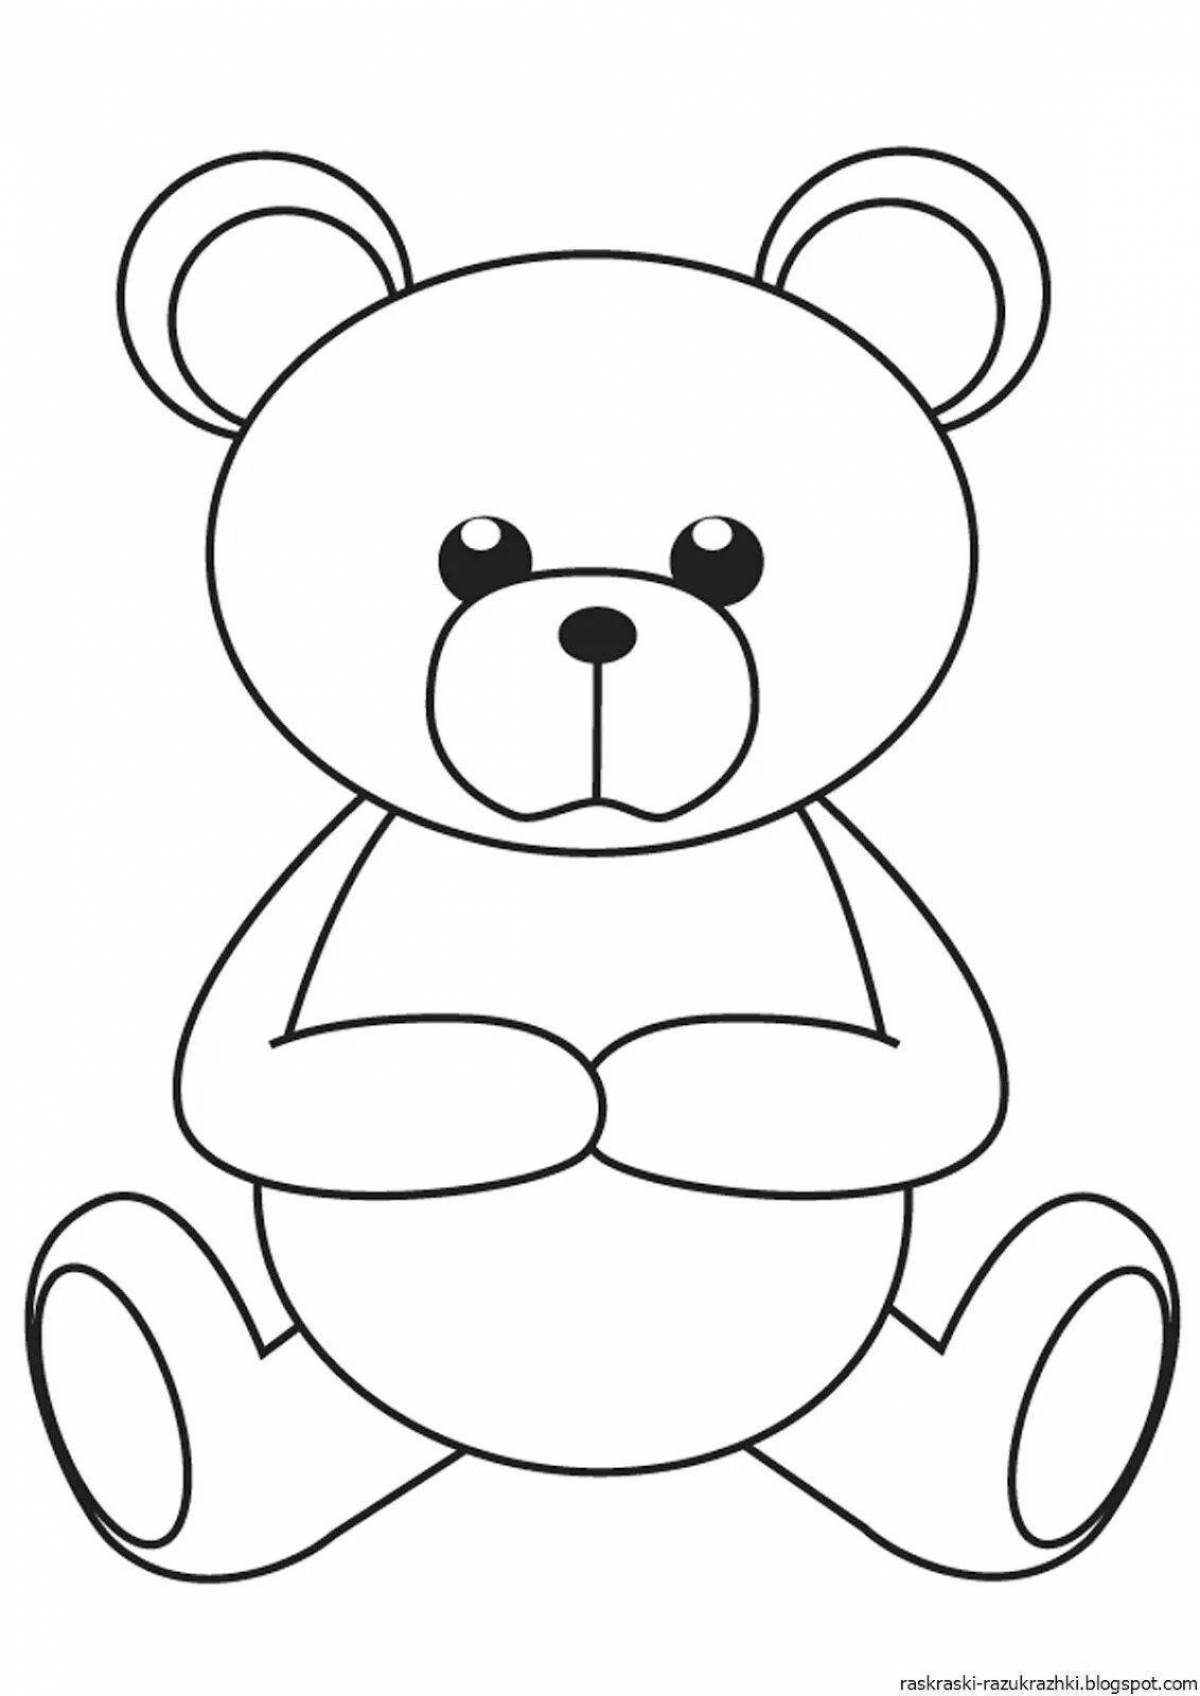 Joyful coloring bear for children 4-5 years old